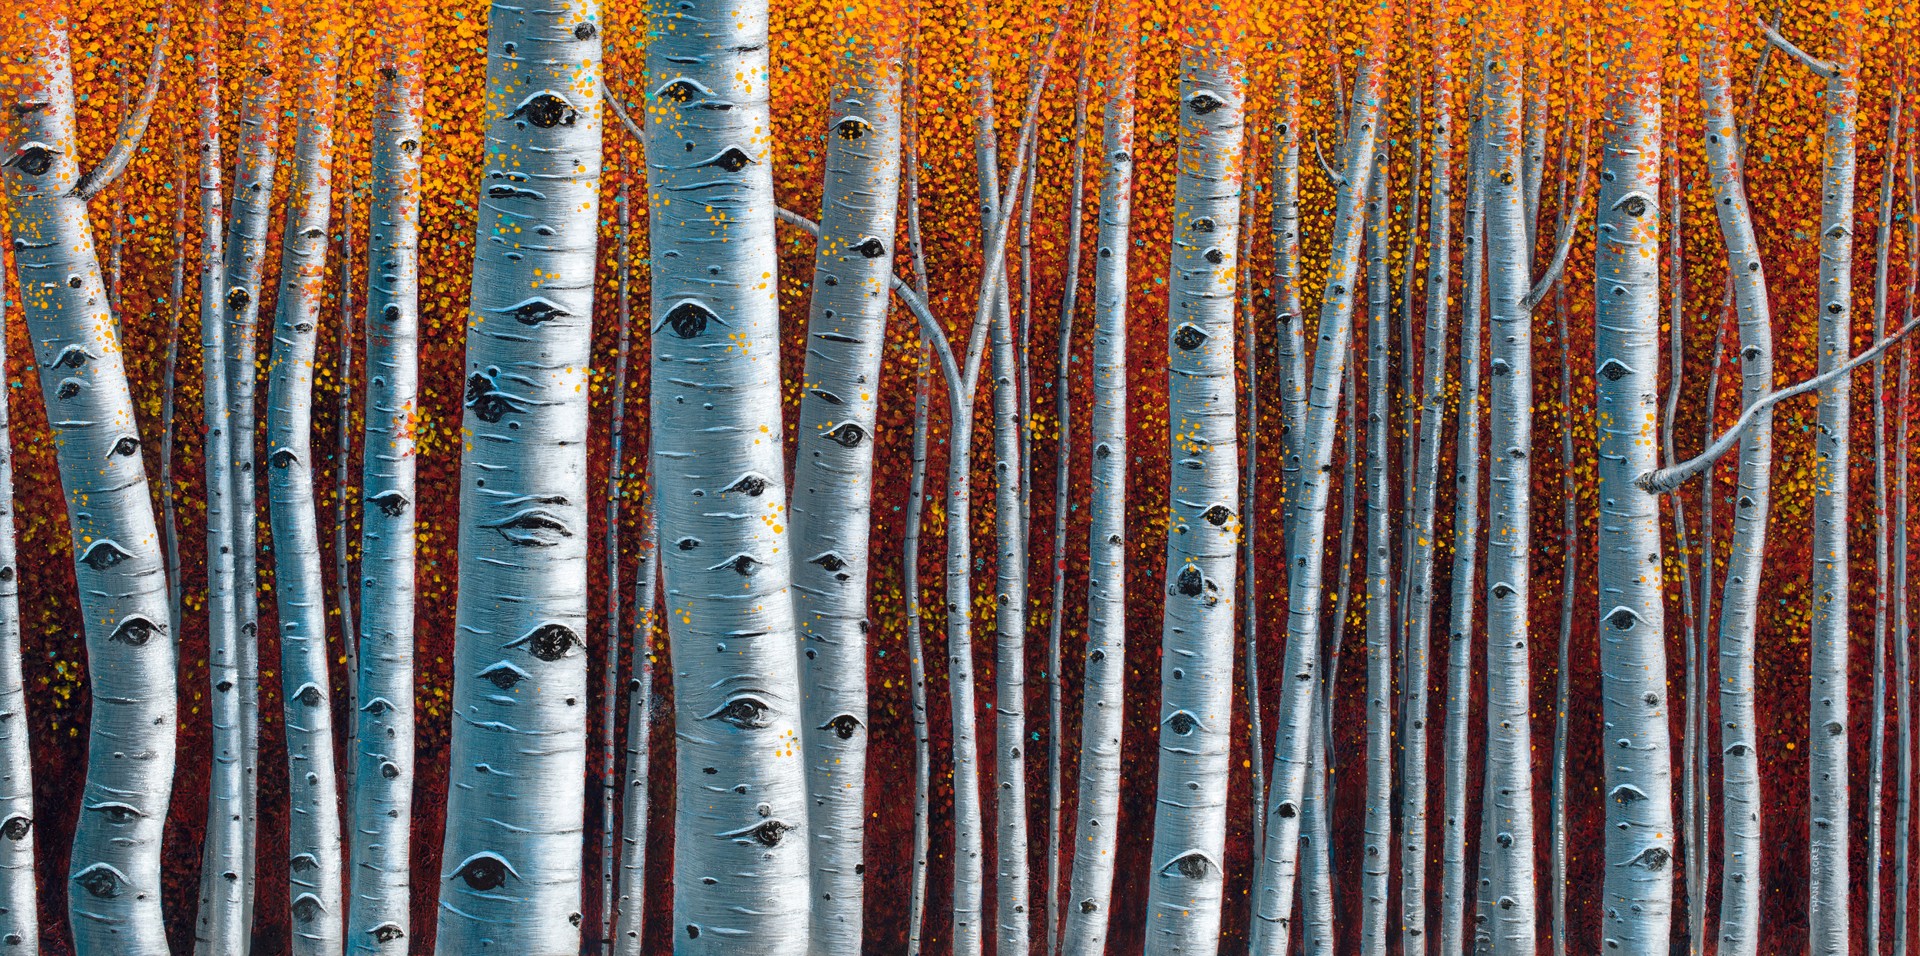 The Woods in Autumn by Thane Gorek